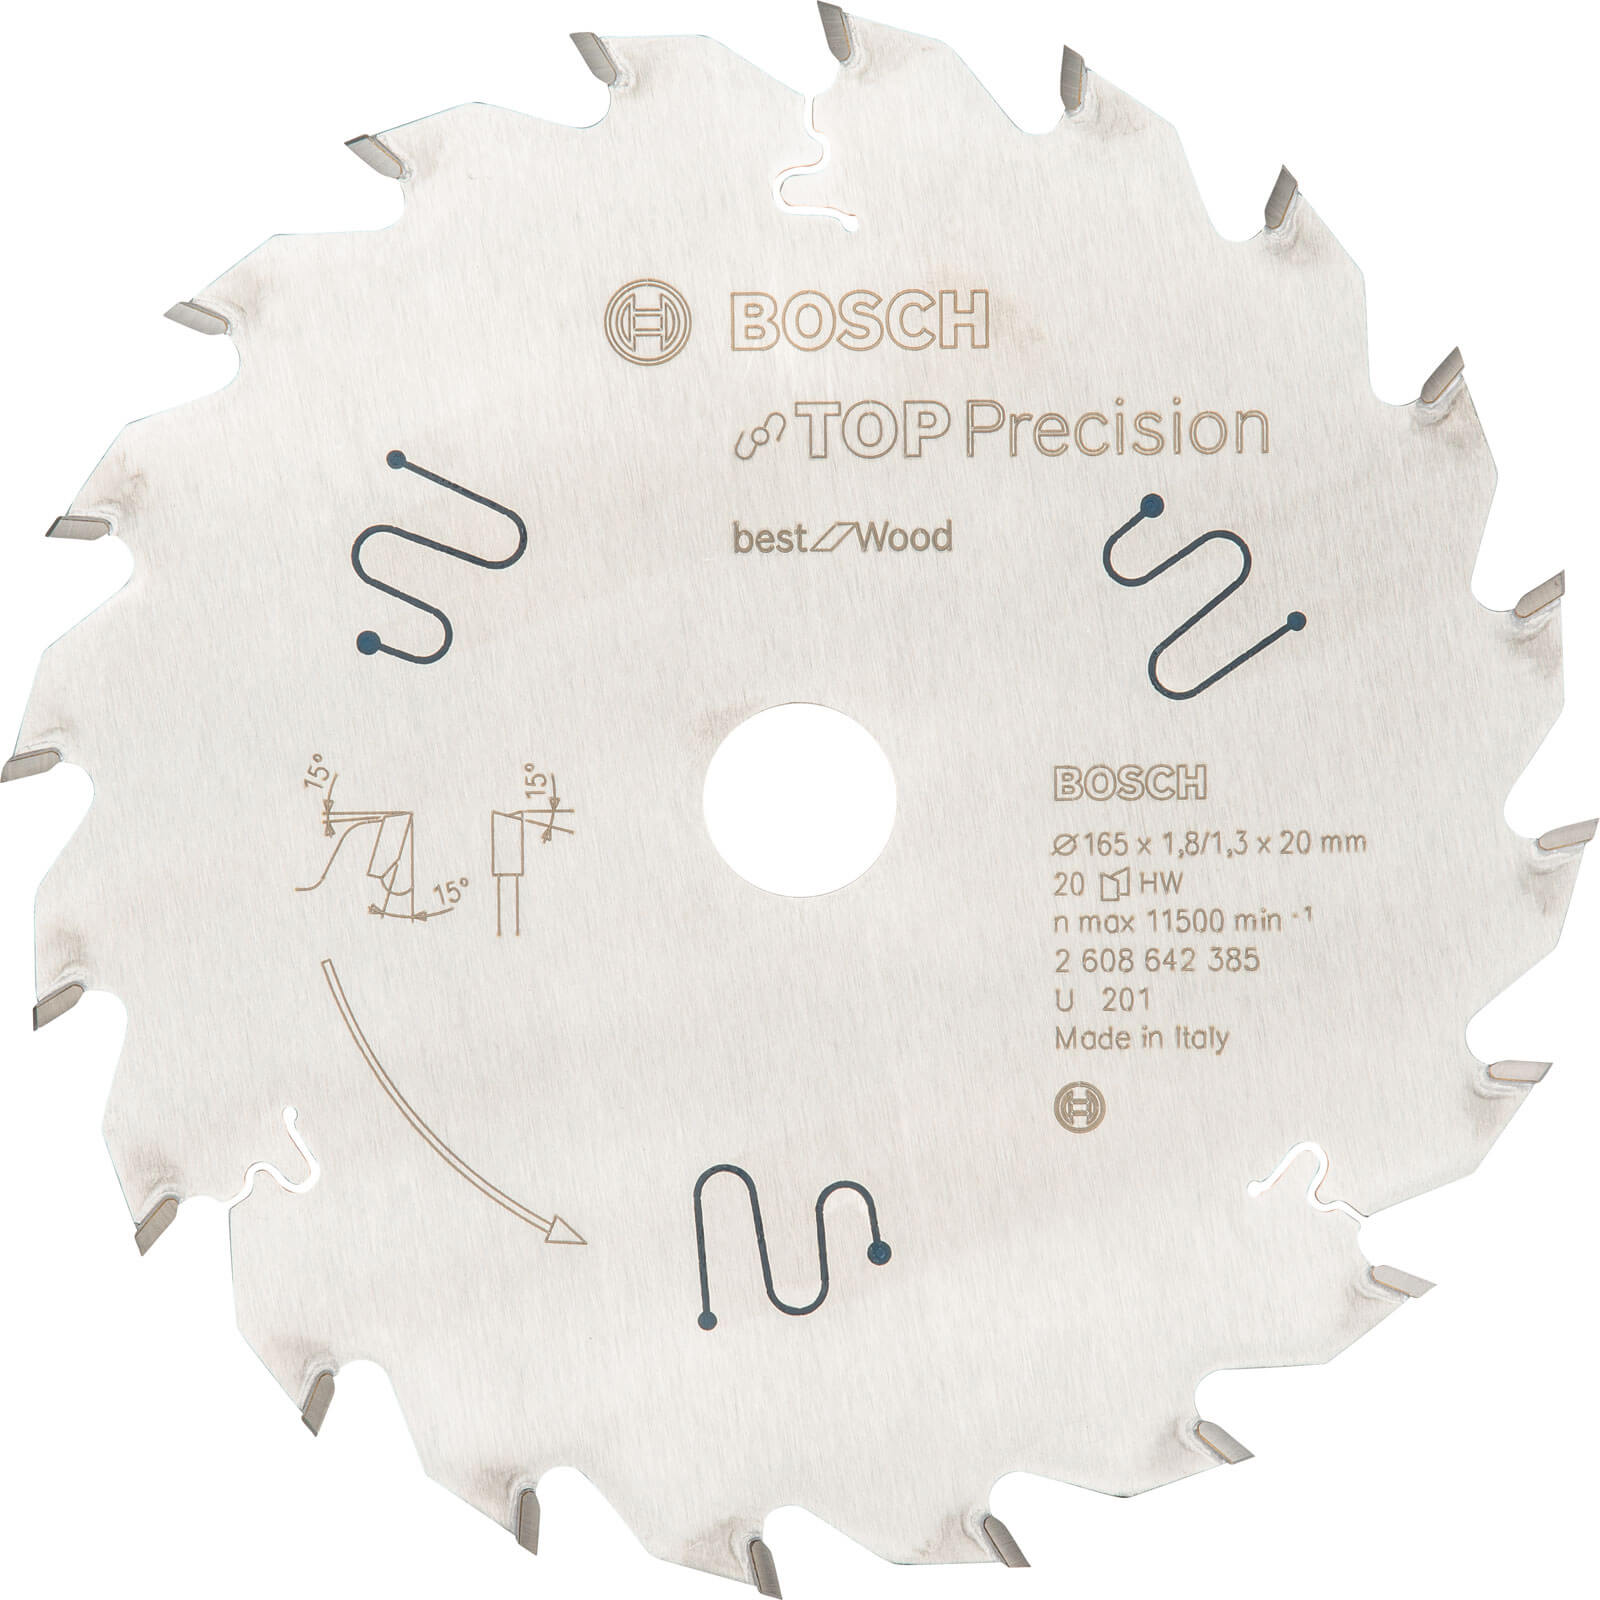 Bosch Top Precision Wood Cutting Saw Blade 165mm 20T 20mm